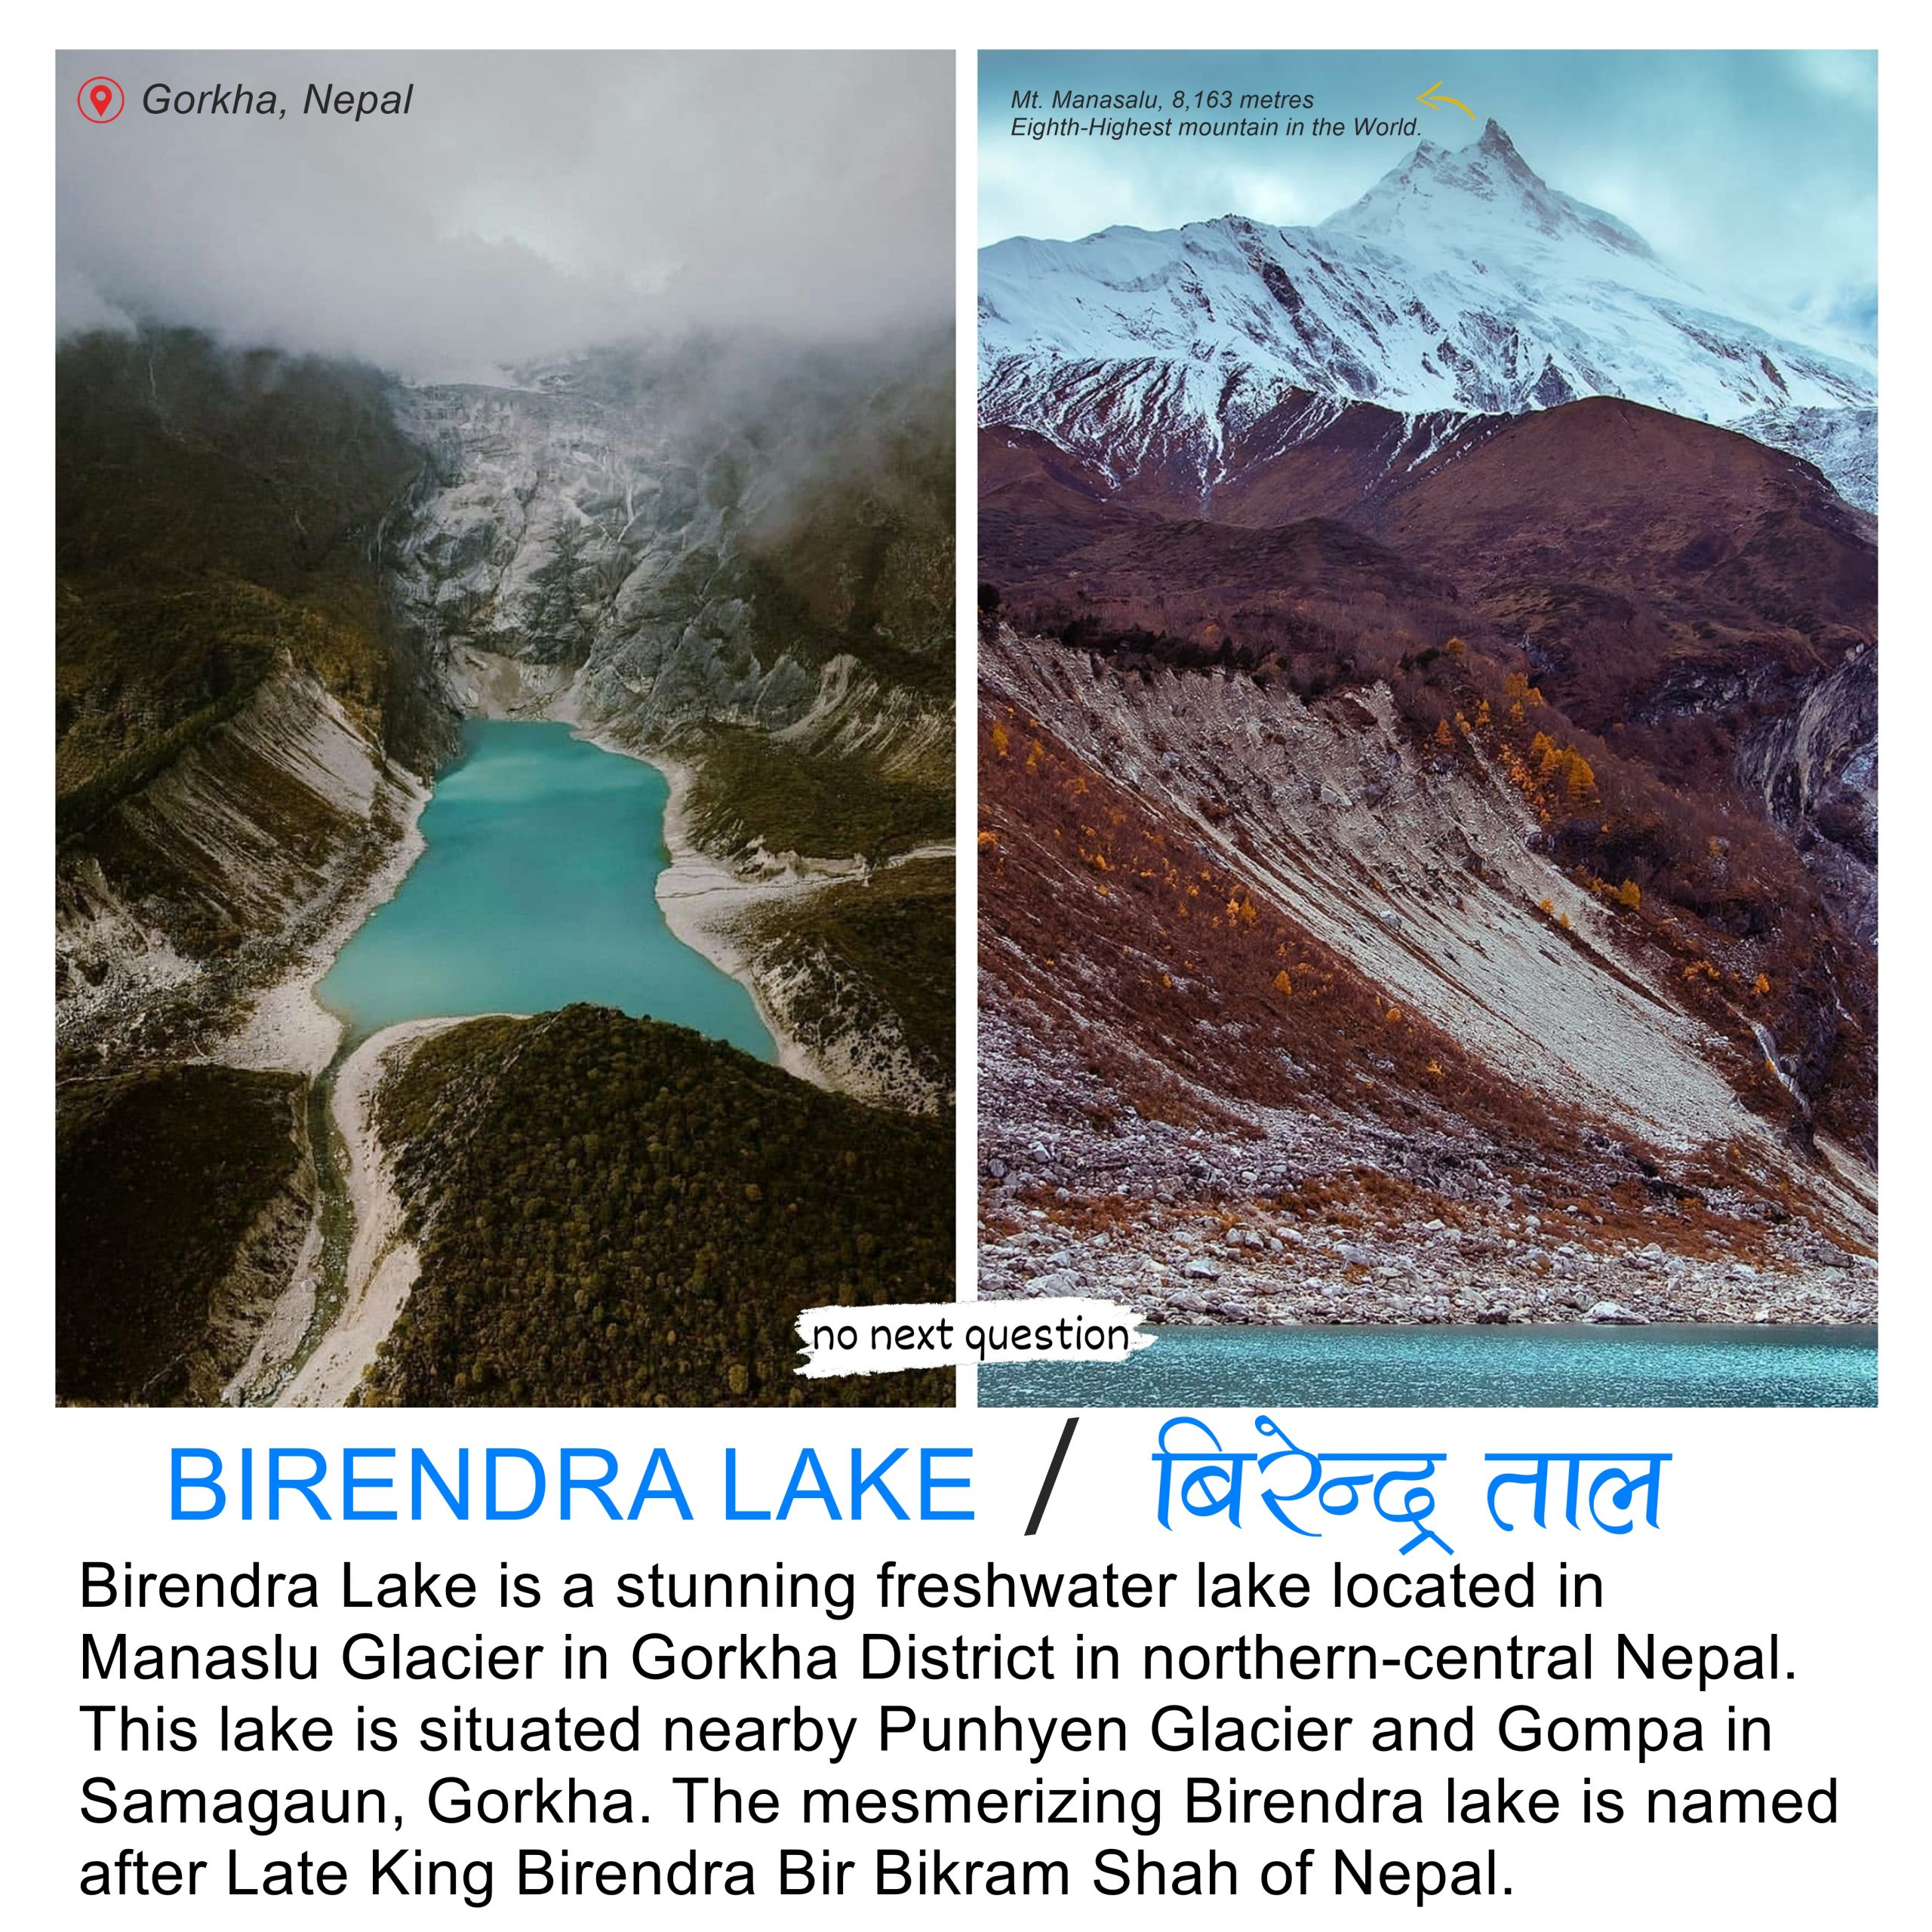 Birendra Lake / Birendra Taal, Gorkha